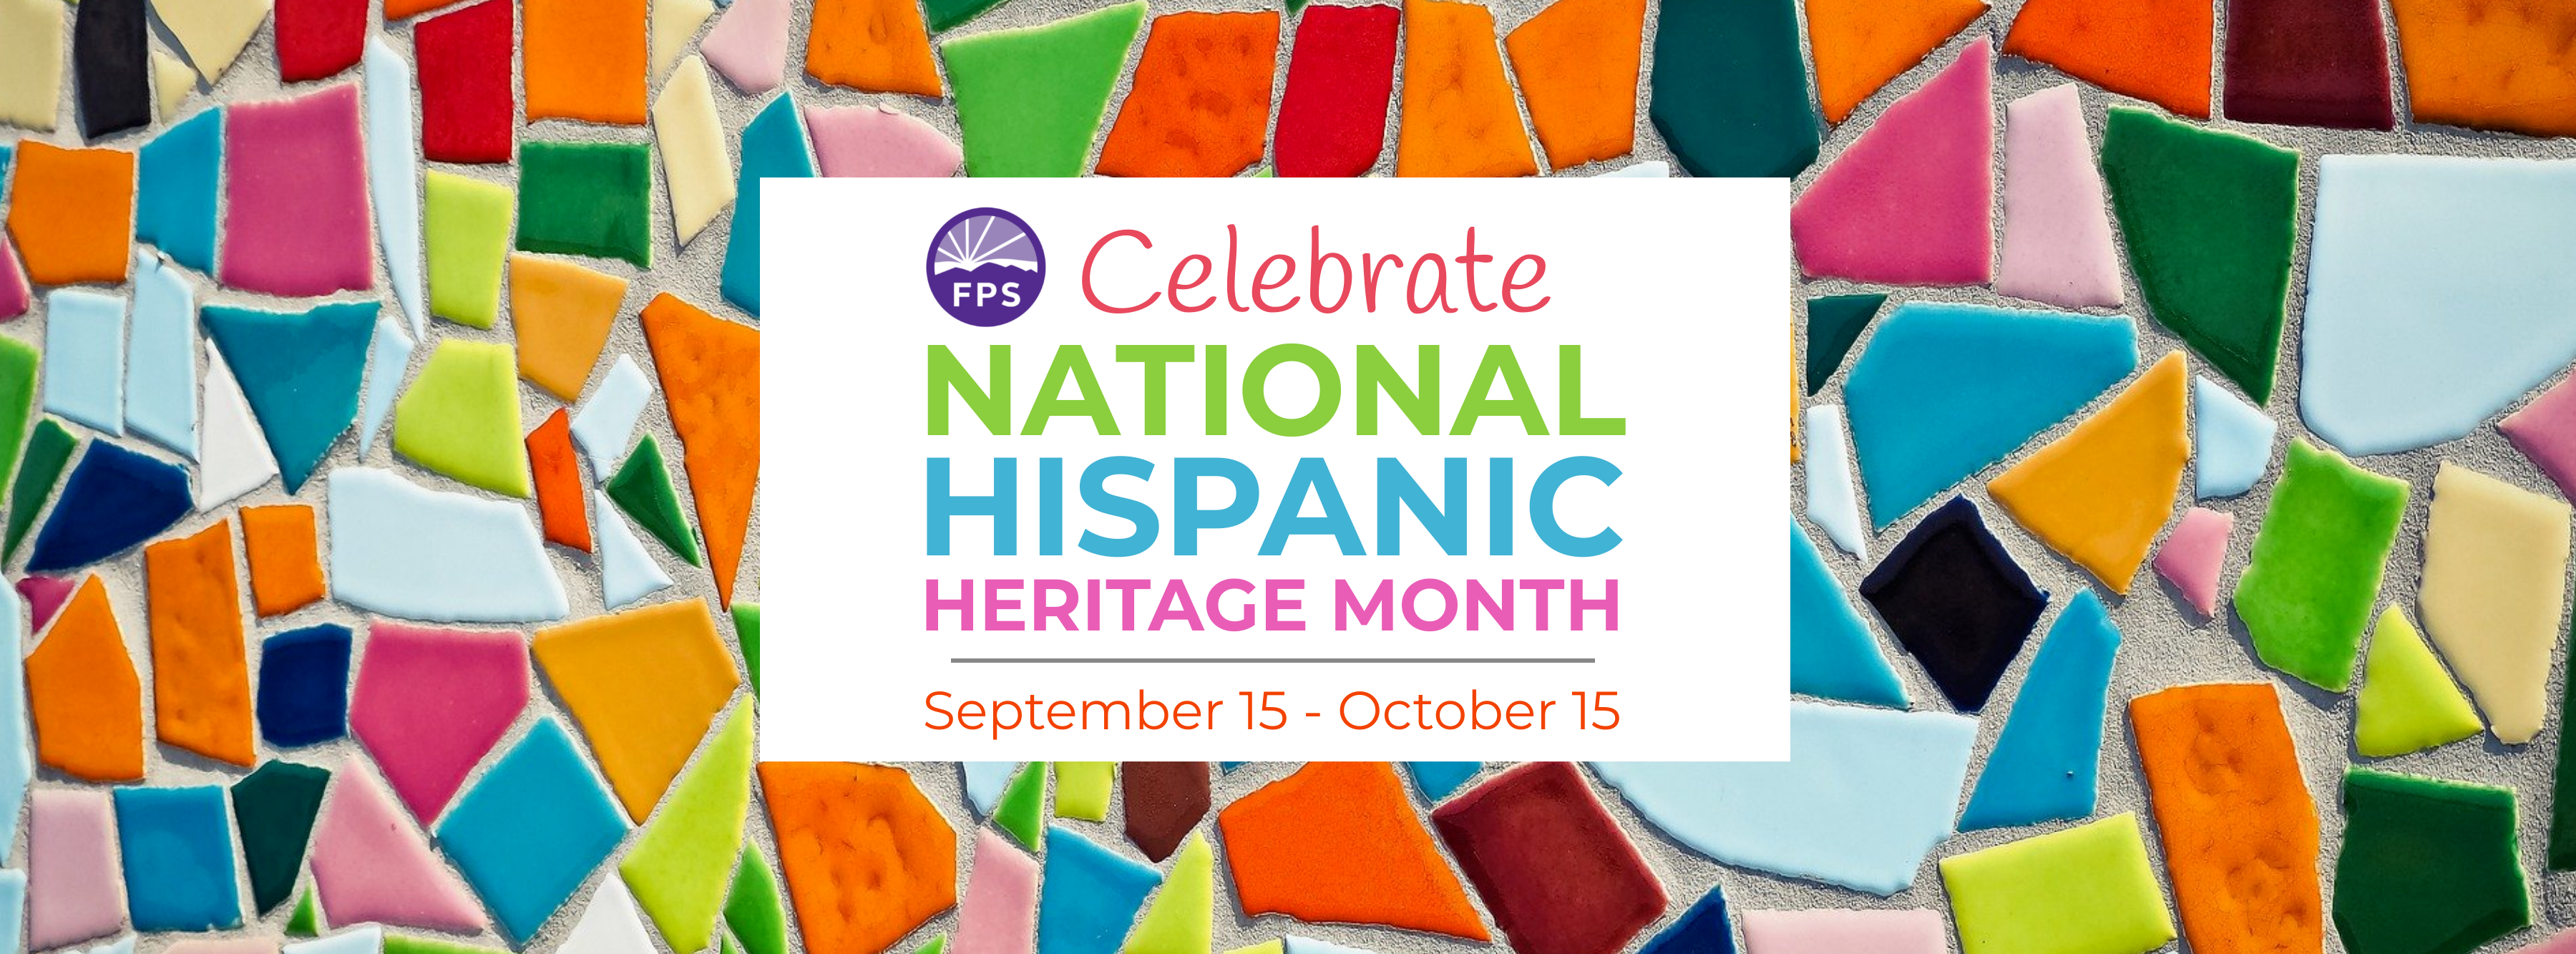 Celebrate National Hispanic Heritage Month – Sept 15 – Oct 15